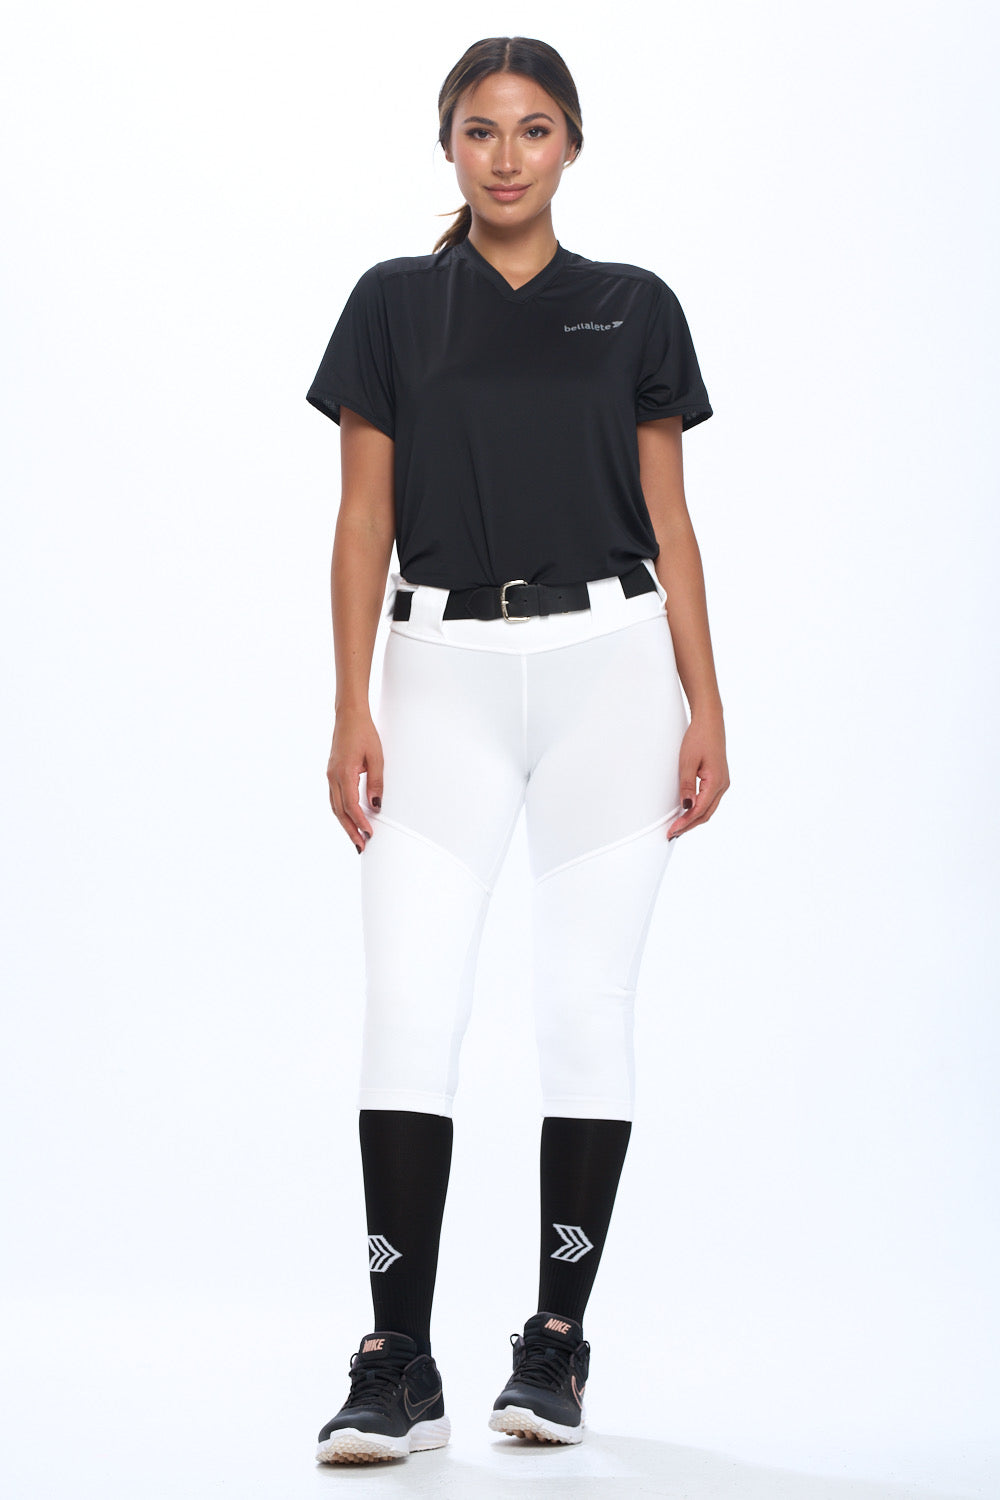 Bellalete Softball Pants, White, Youth XL | eBay